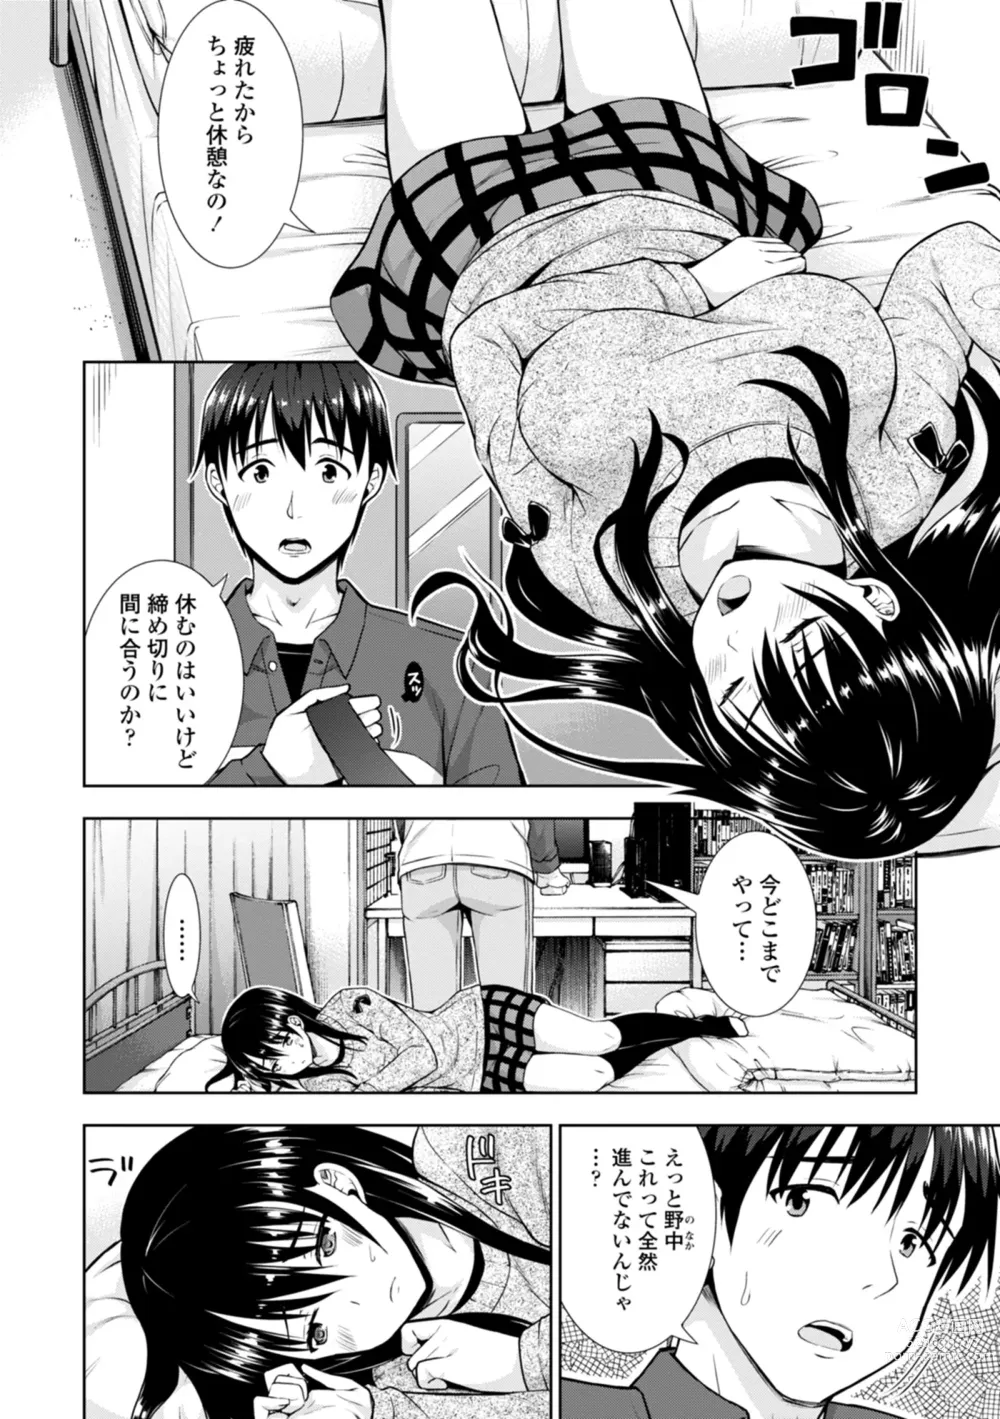 Page 4 of manga Onnanoko datte H Shitaku Narundamon.